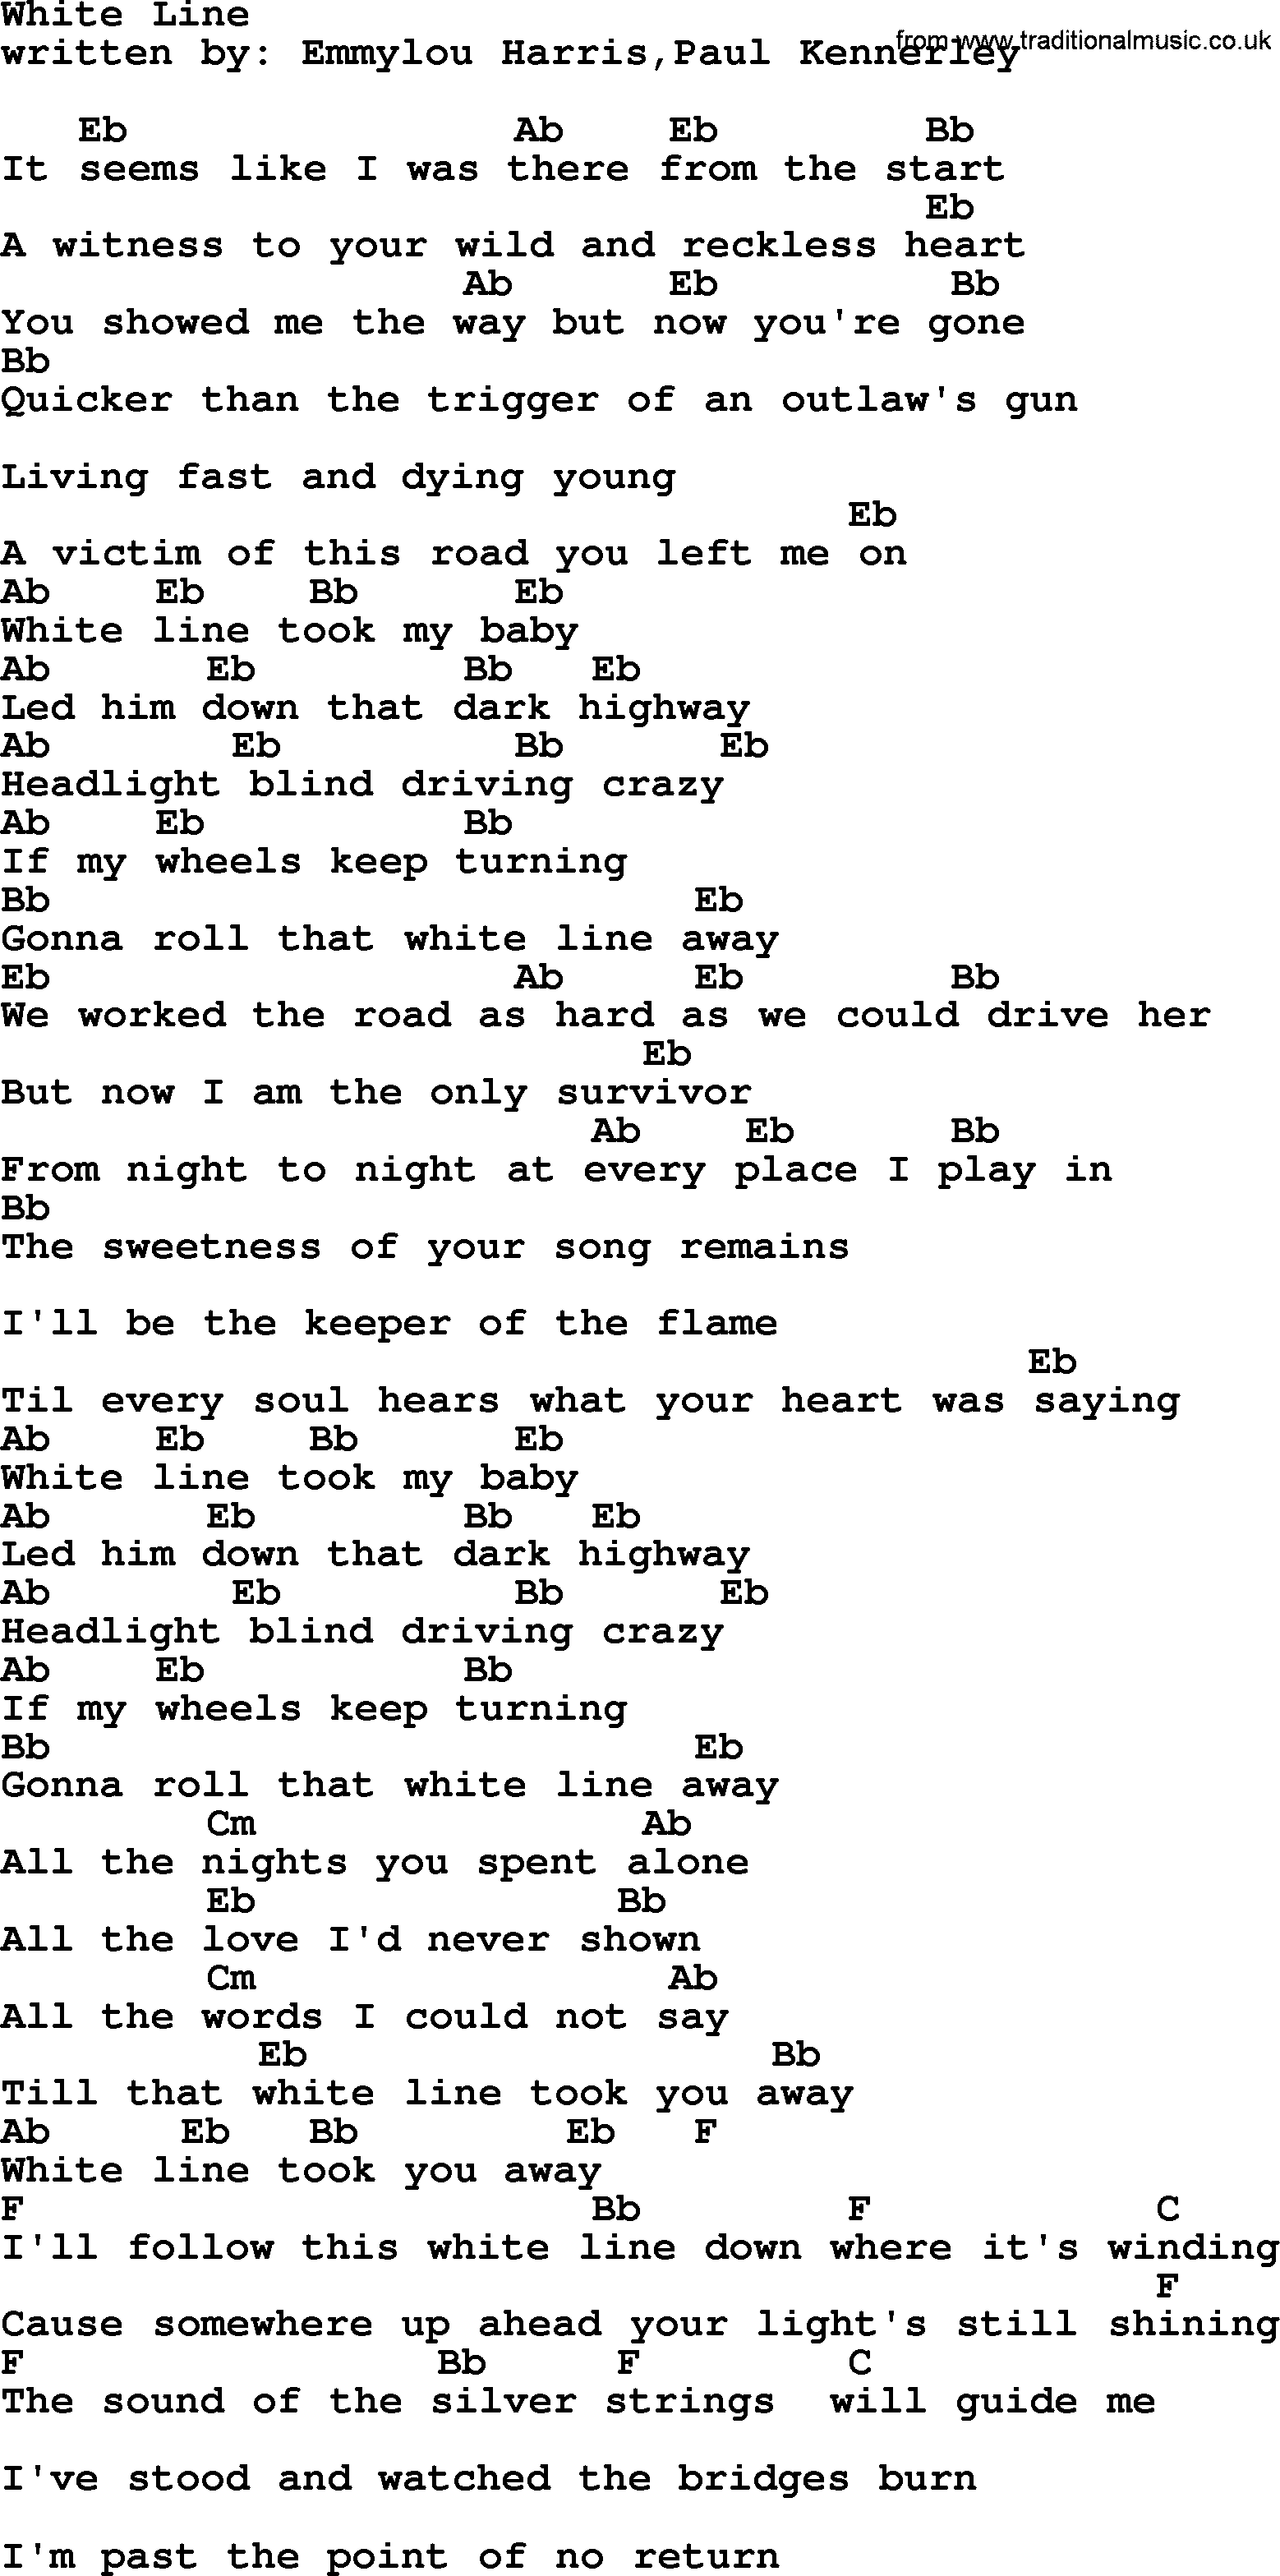 Emmylou Harris song: White Line lyrics and chords